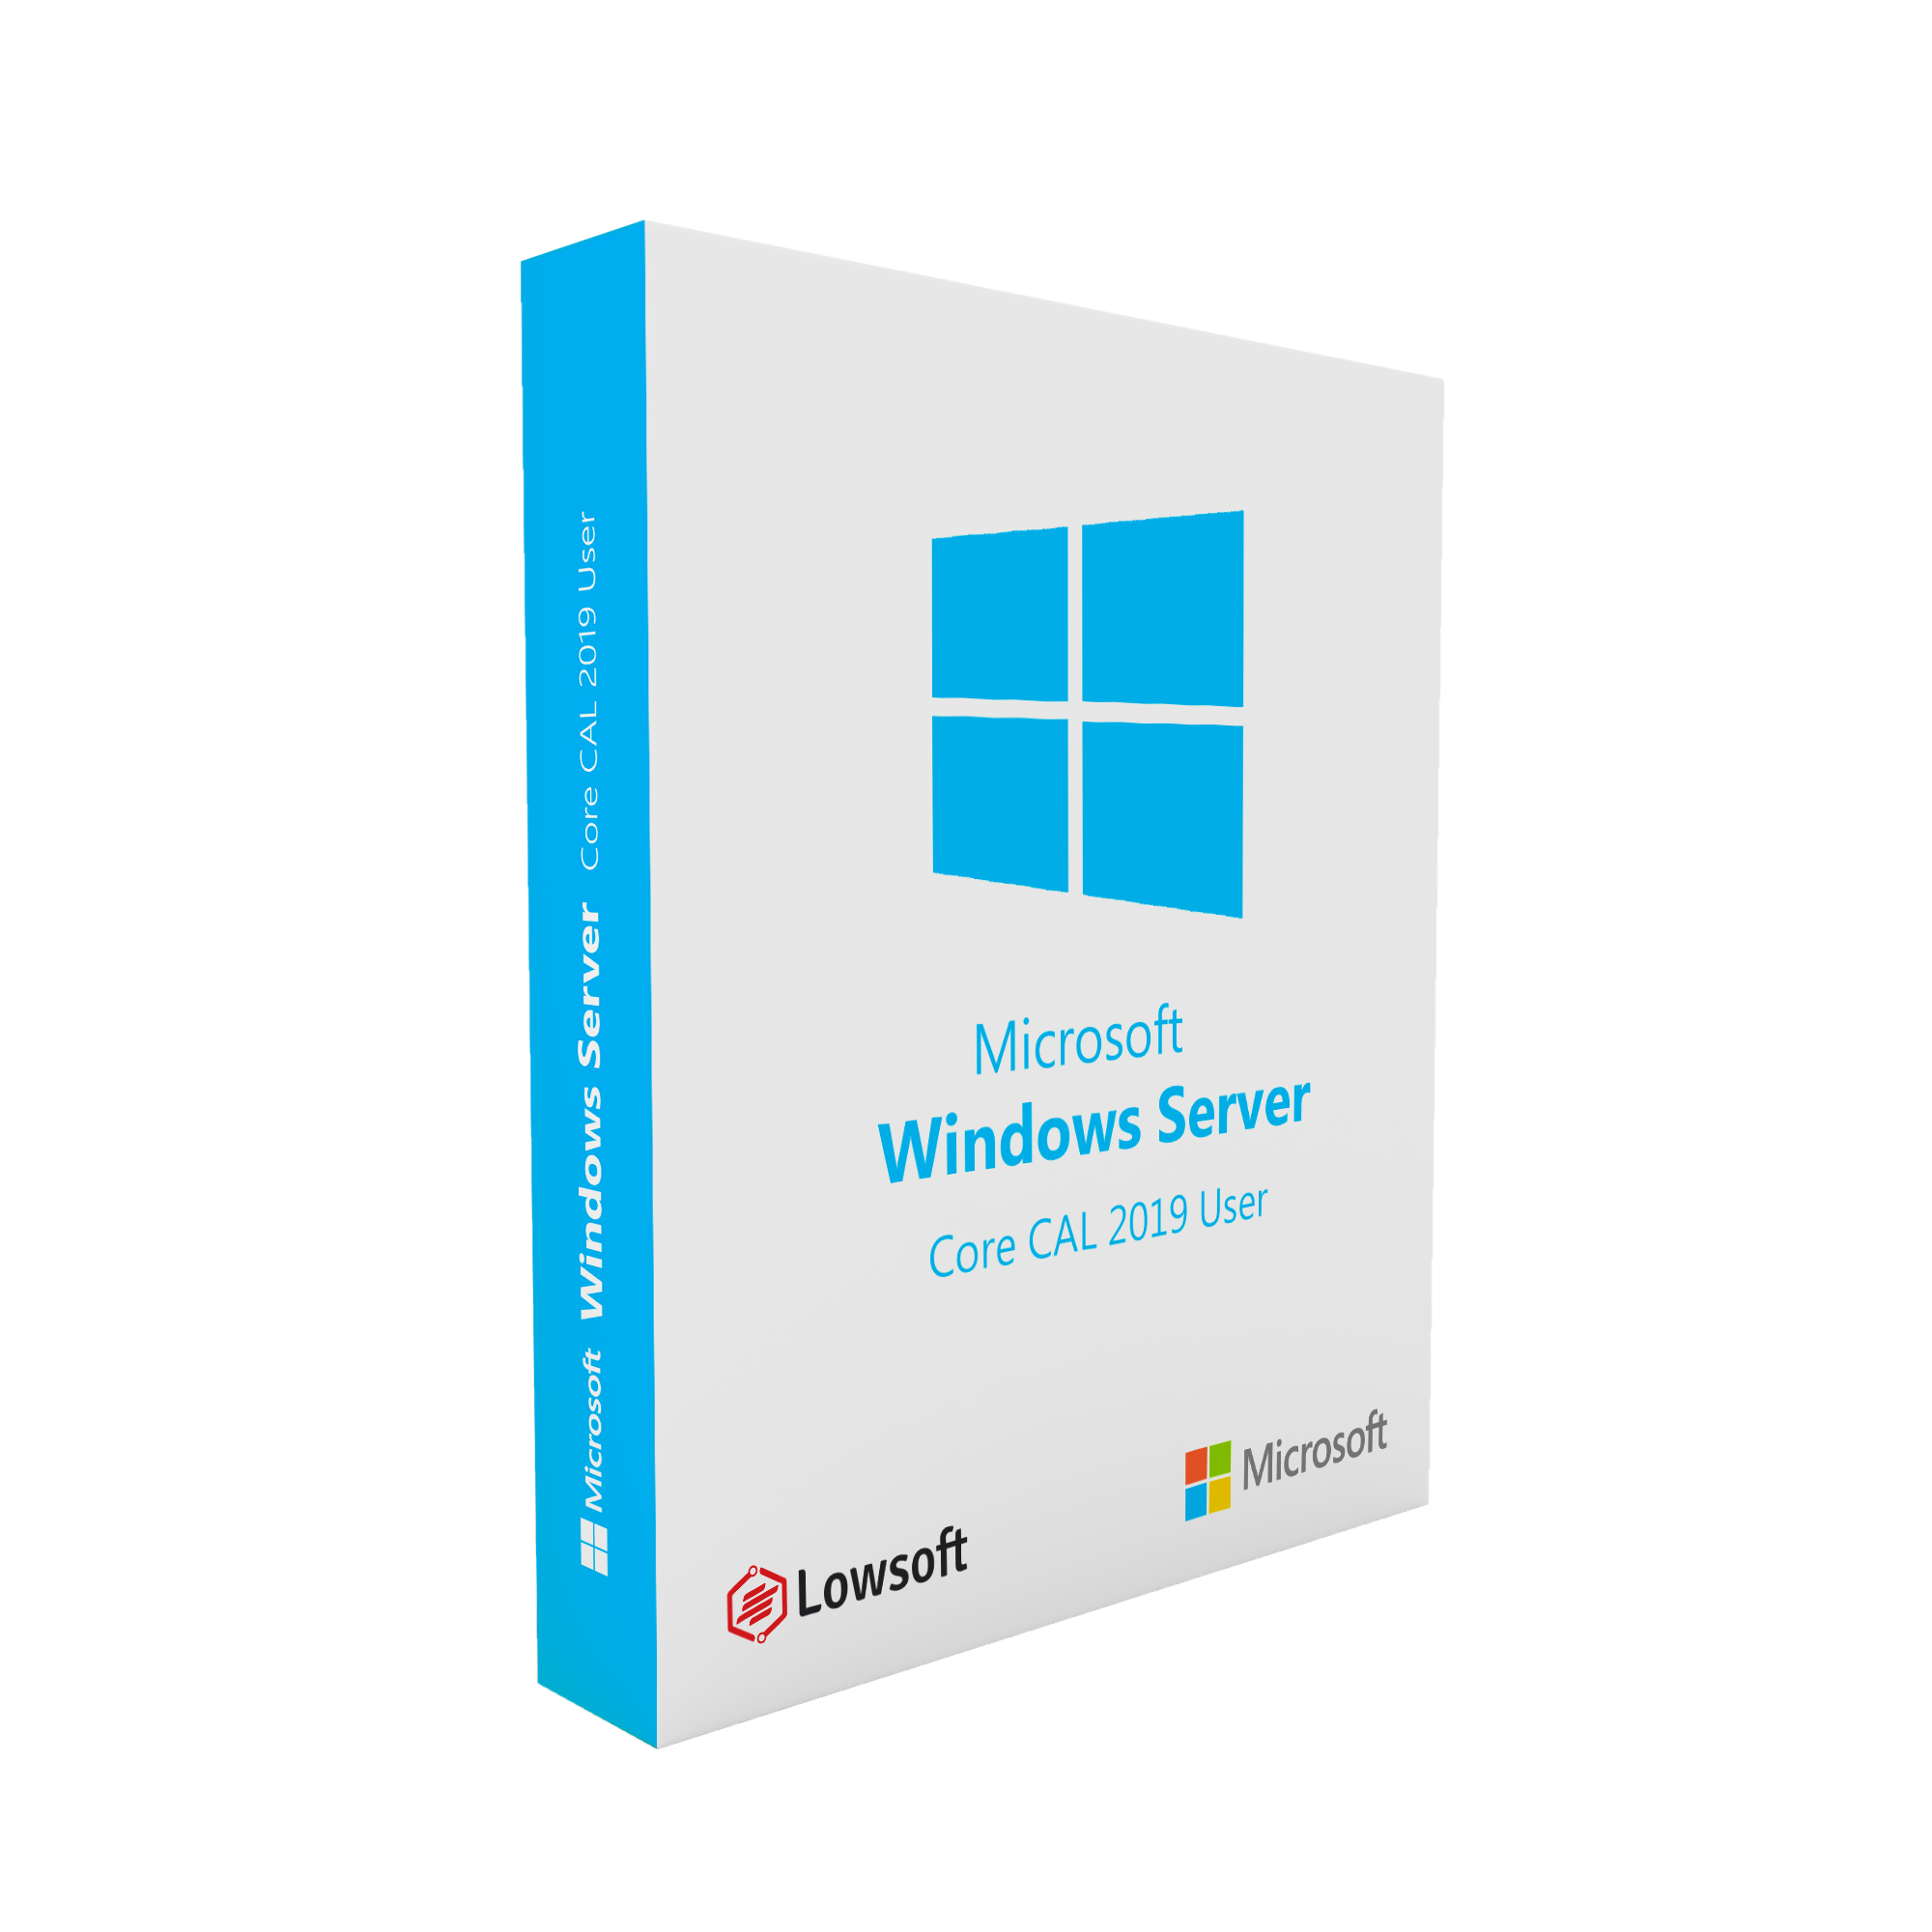 Windows Server Core CAL 2019 User